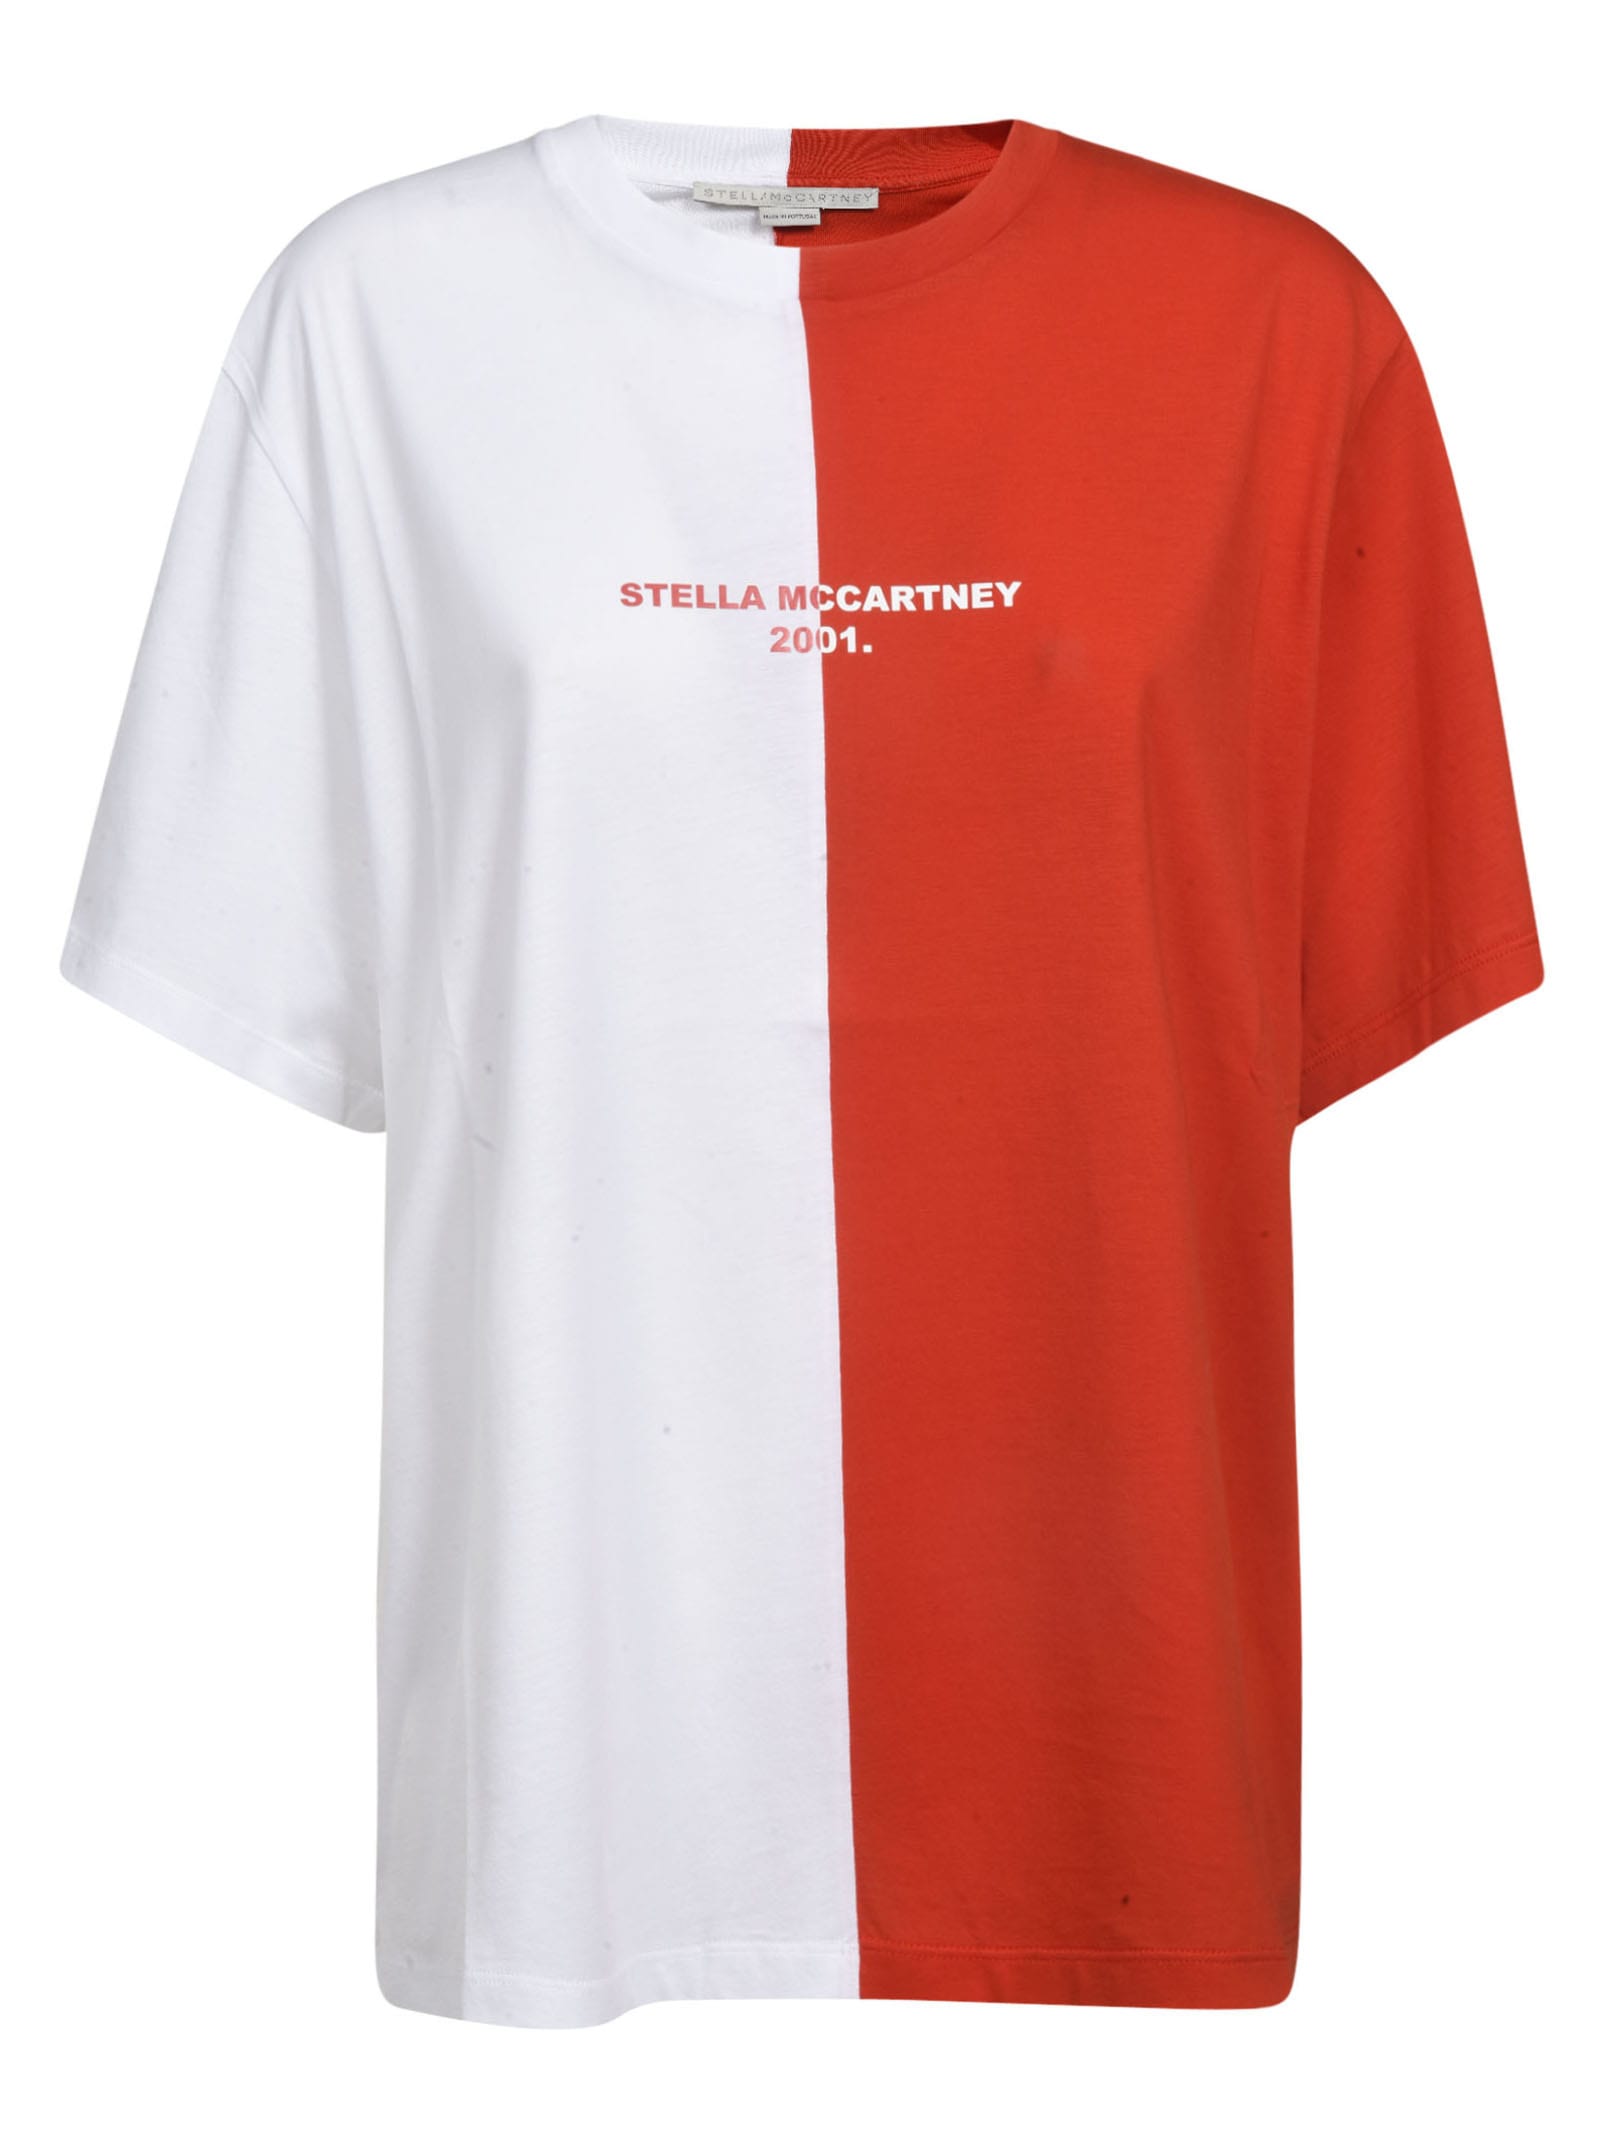 Stella McCartney Contrast Color T-Shirt